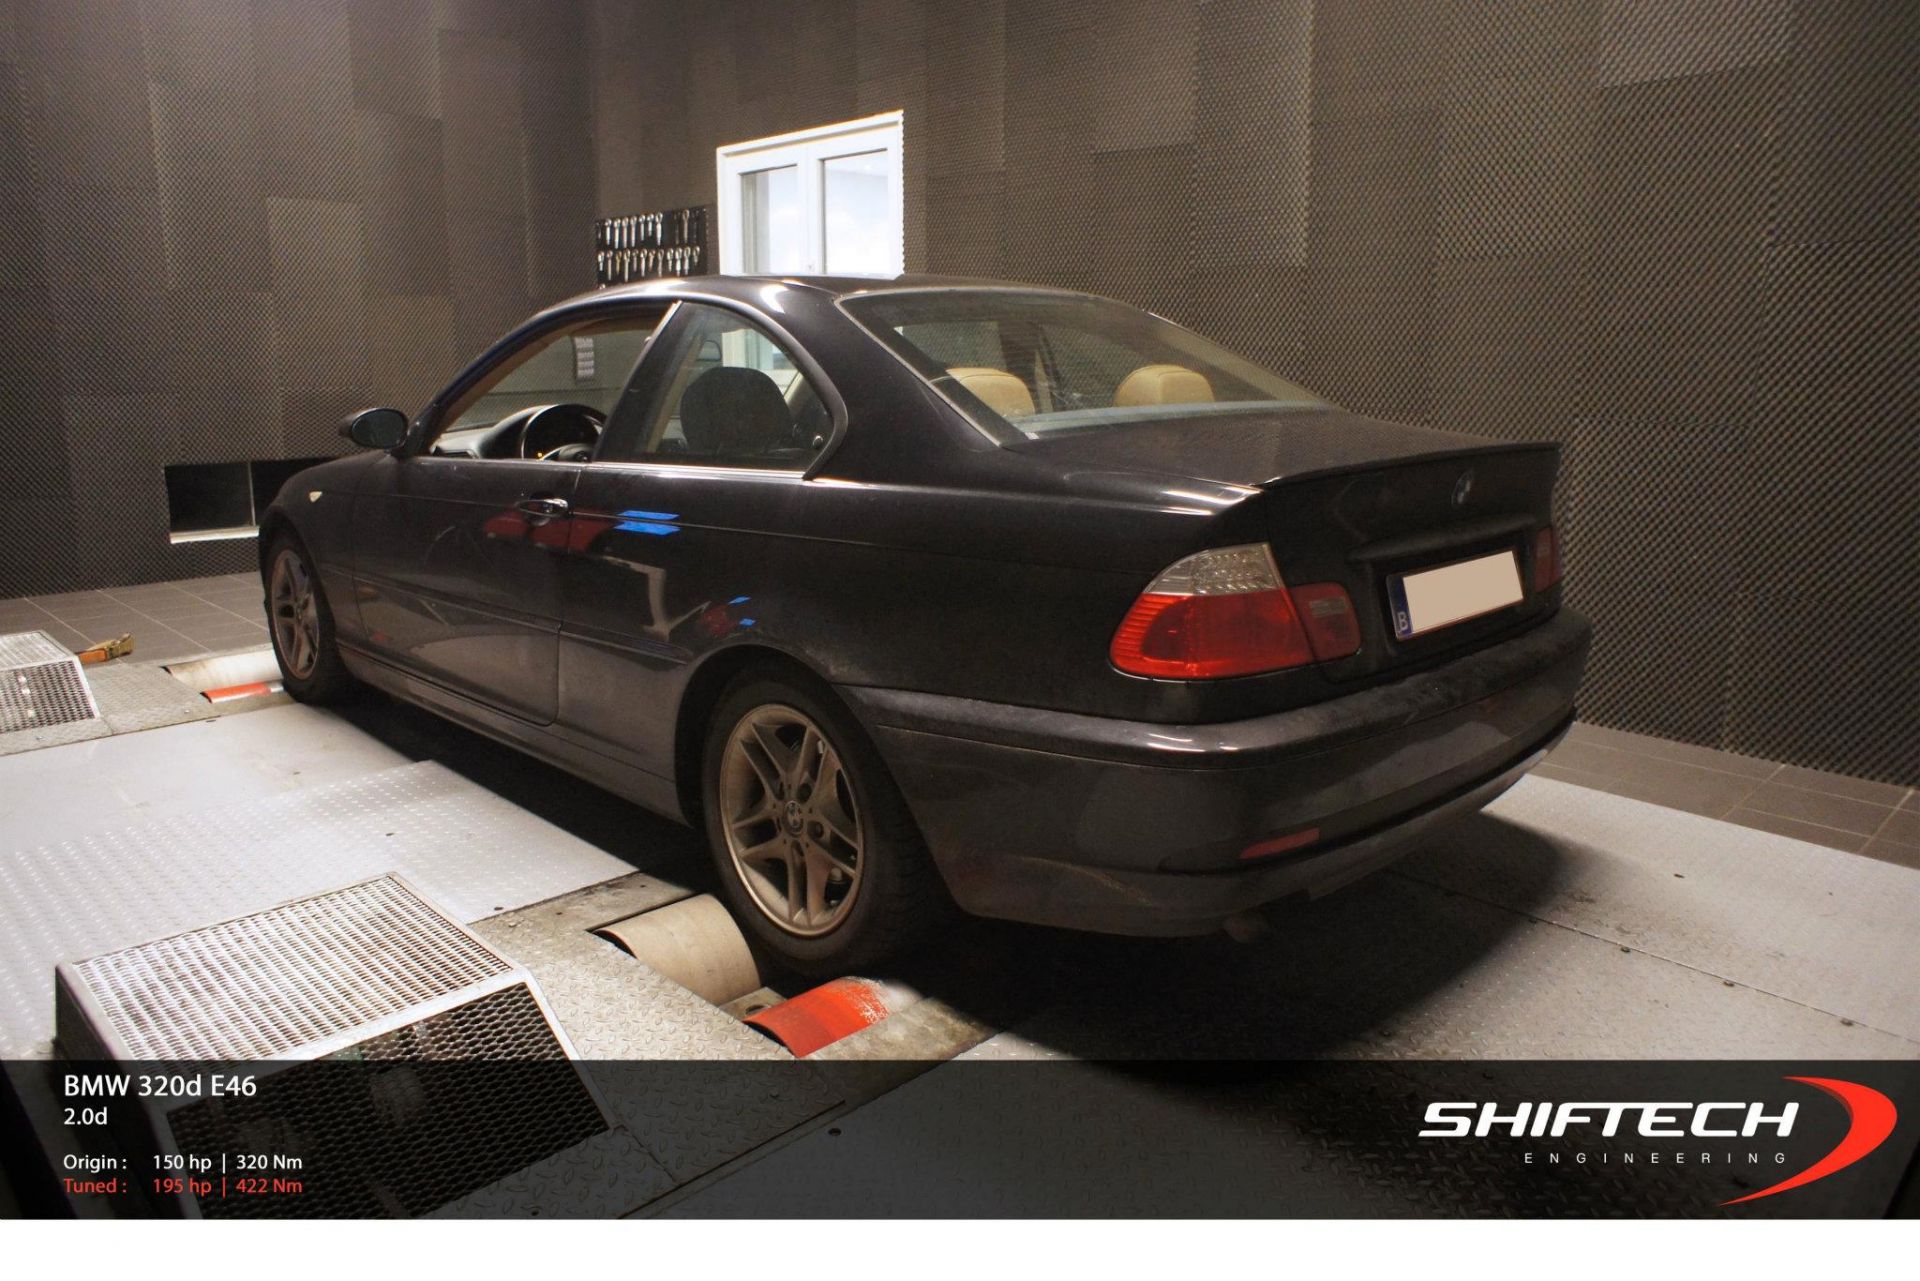 BMW 3-serie E46 1998 20d | Shiftech